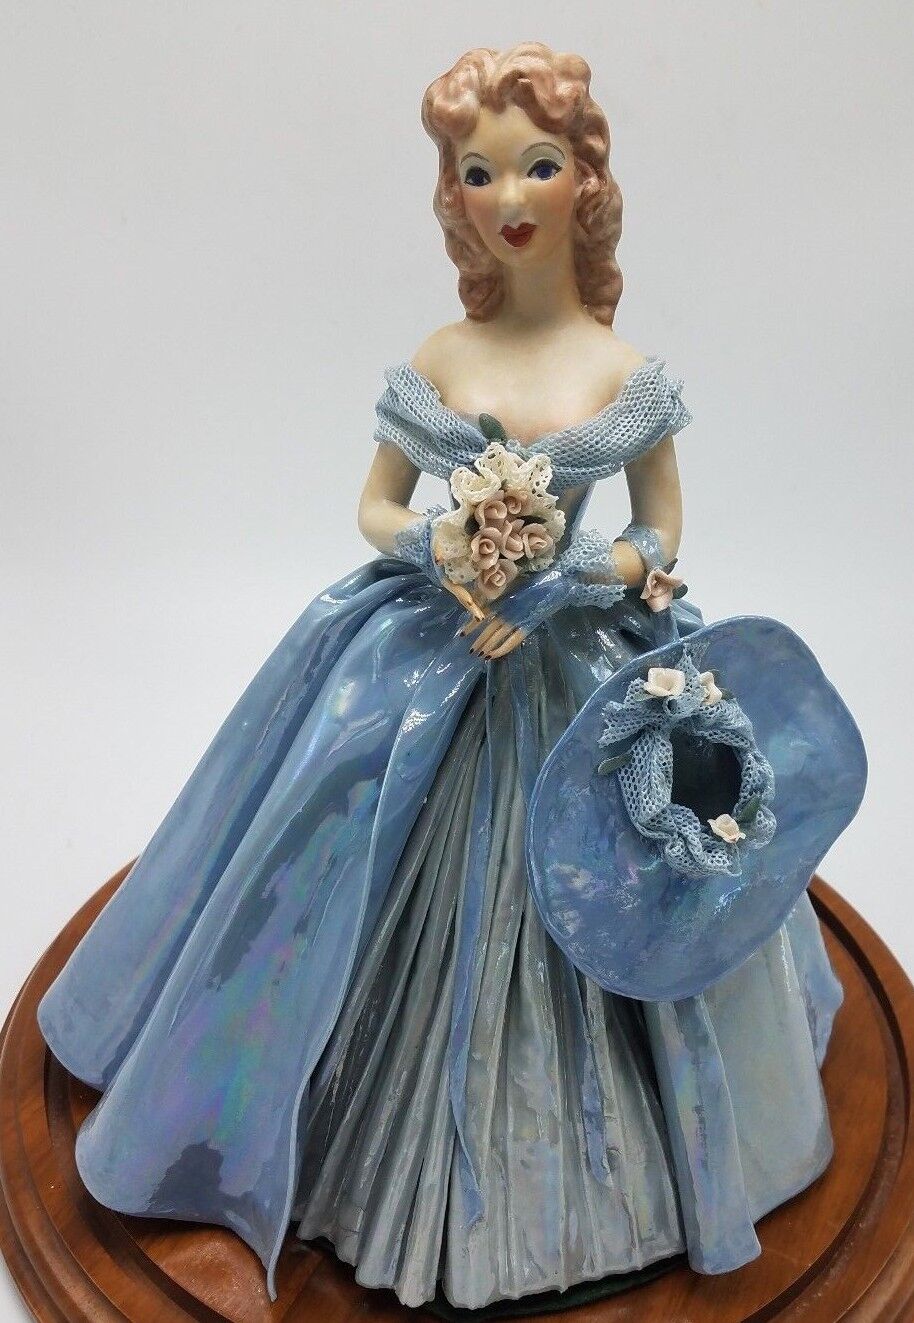 Vintage Handmade Ceramic Woman Figurine in Blue Dress with Hat